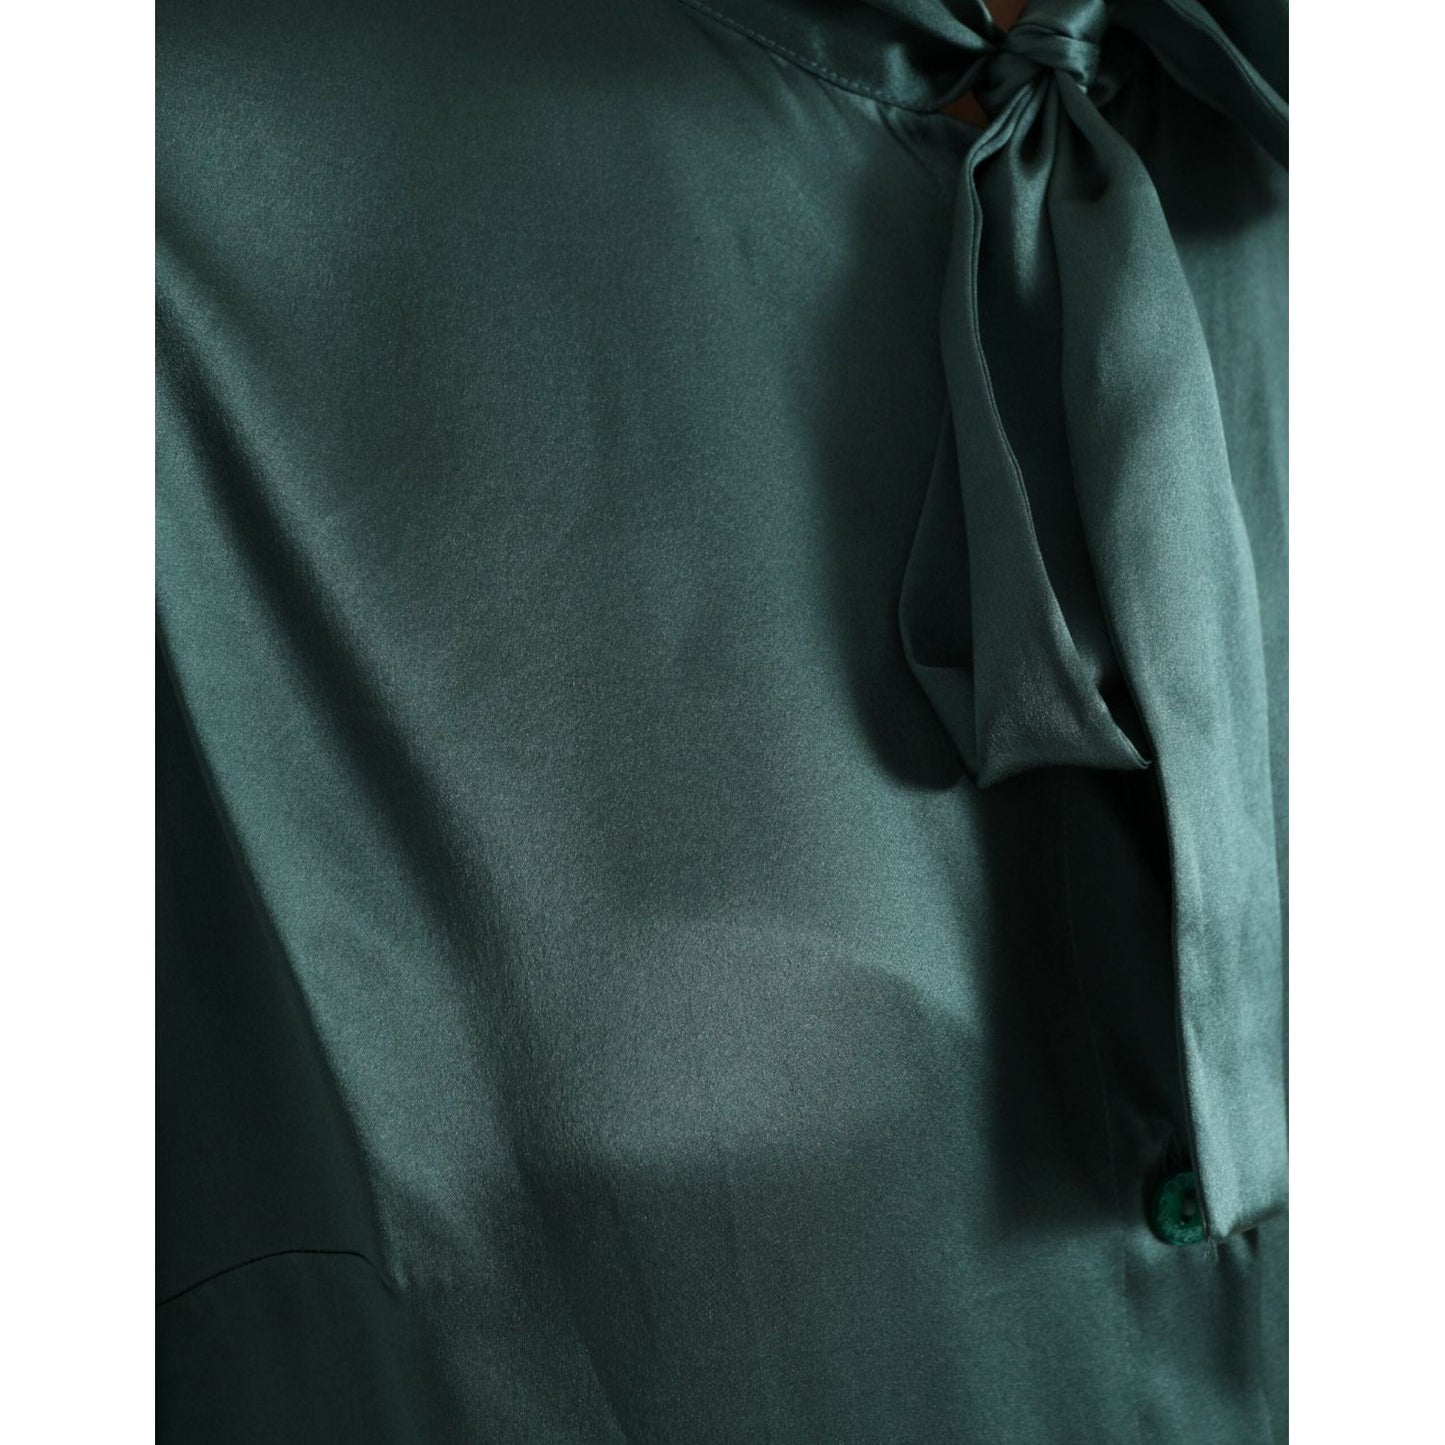 Dolce & Gabbana Elegant Dark Green Silk Blouse Top elegant-dark-green-silk-blouse-top